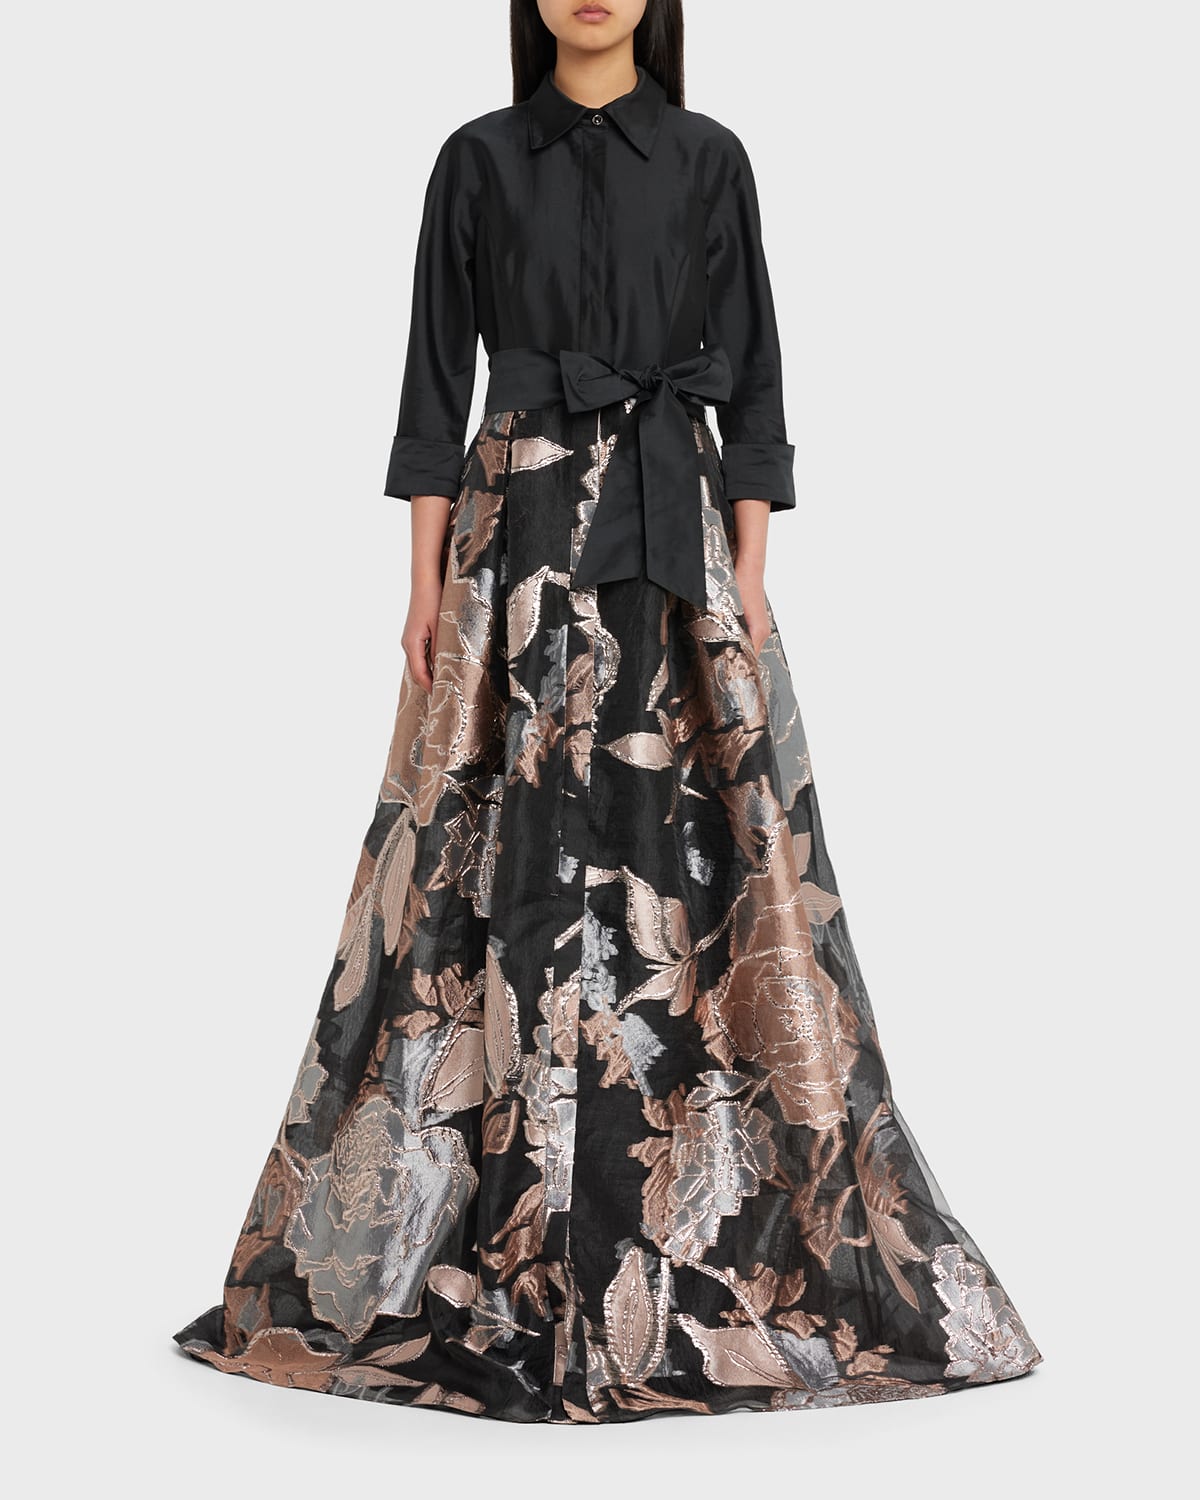 Rickie Freeman For Teri Jon Taffeta And Metallic Floral Jacquard Shirt Gown In Black Mult